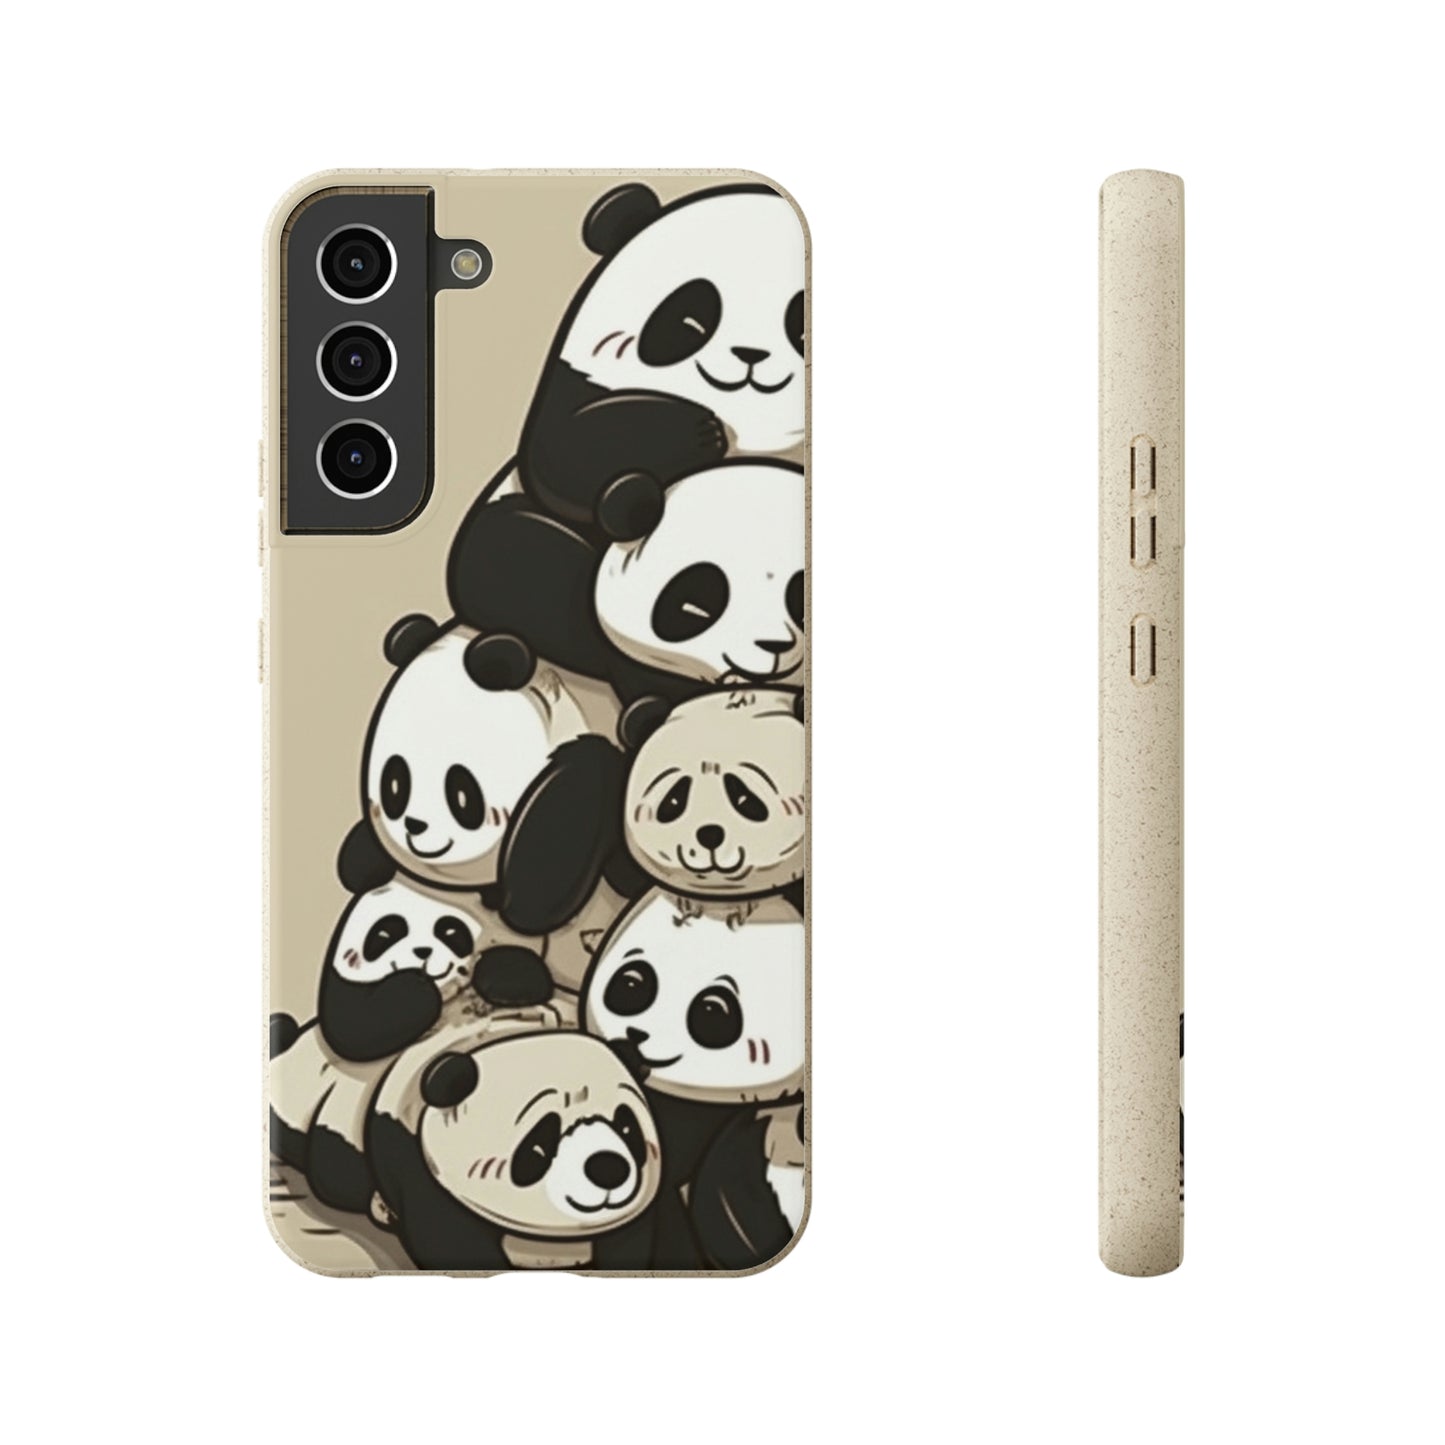 Pile of Pandas Biodegradable Phone Case